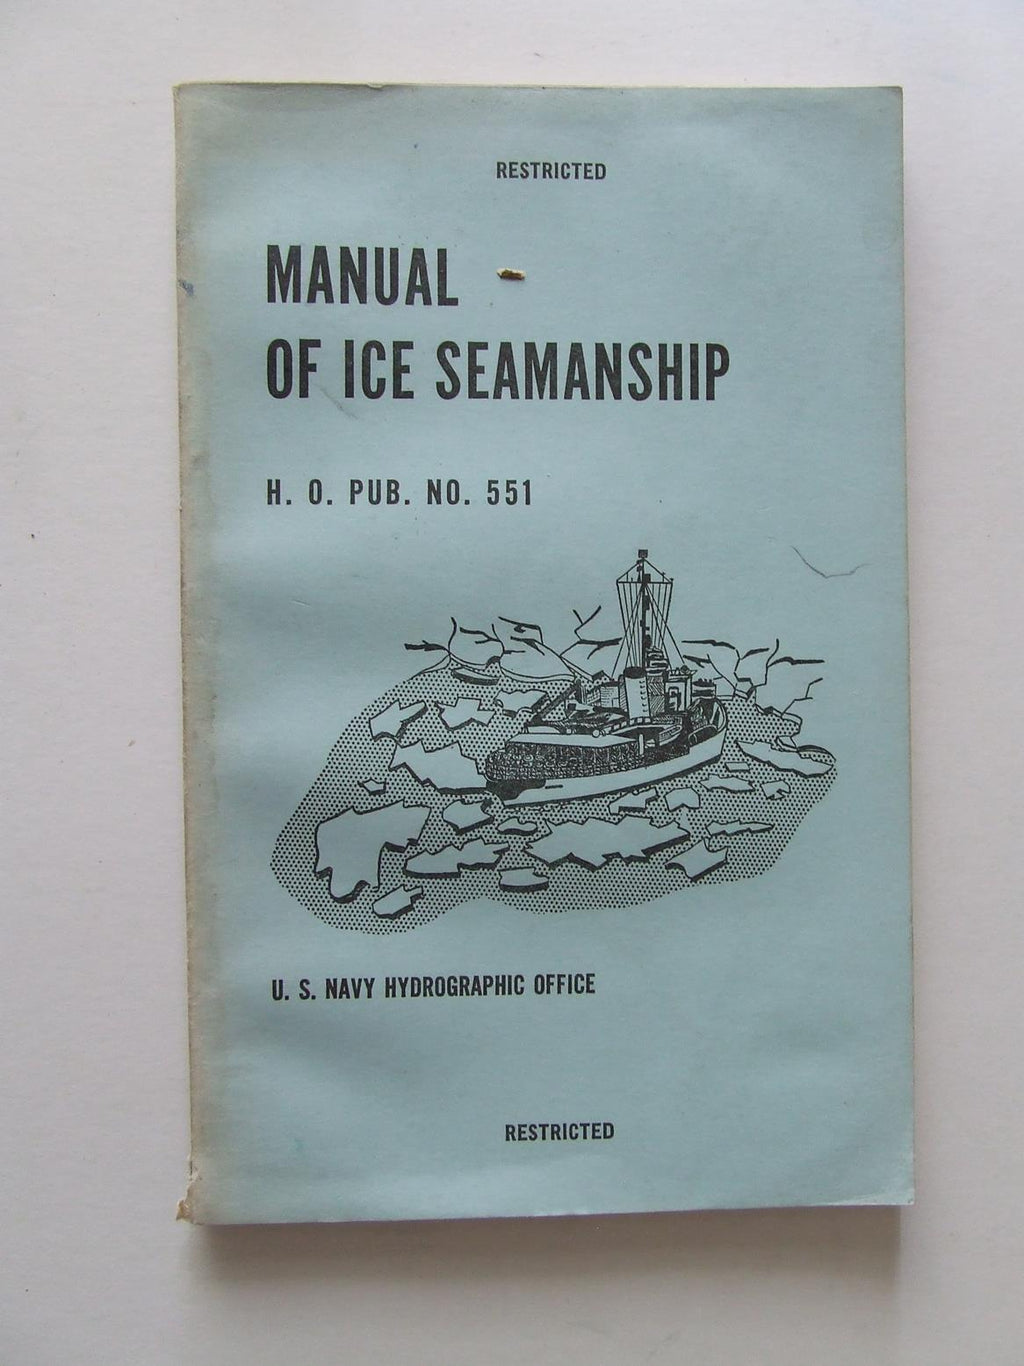 Manual of Ice Seamanship [H.O. Pub. no. 551]